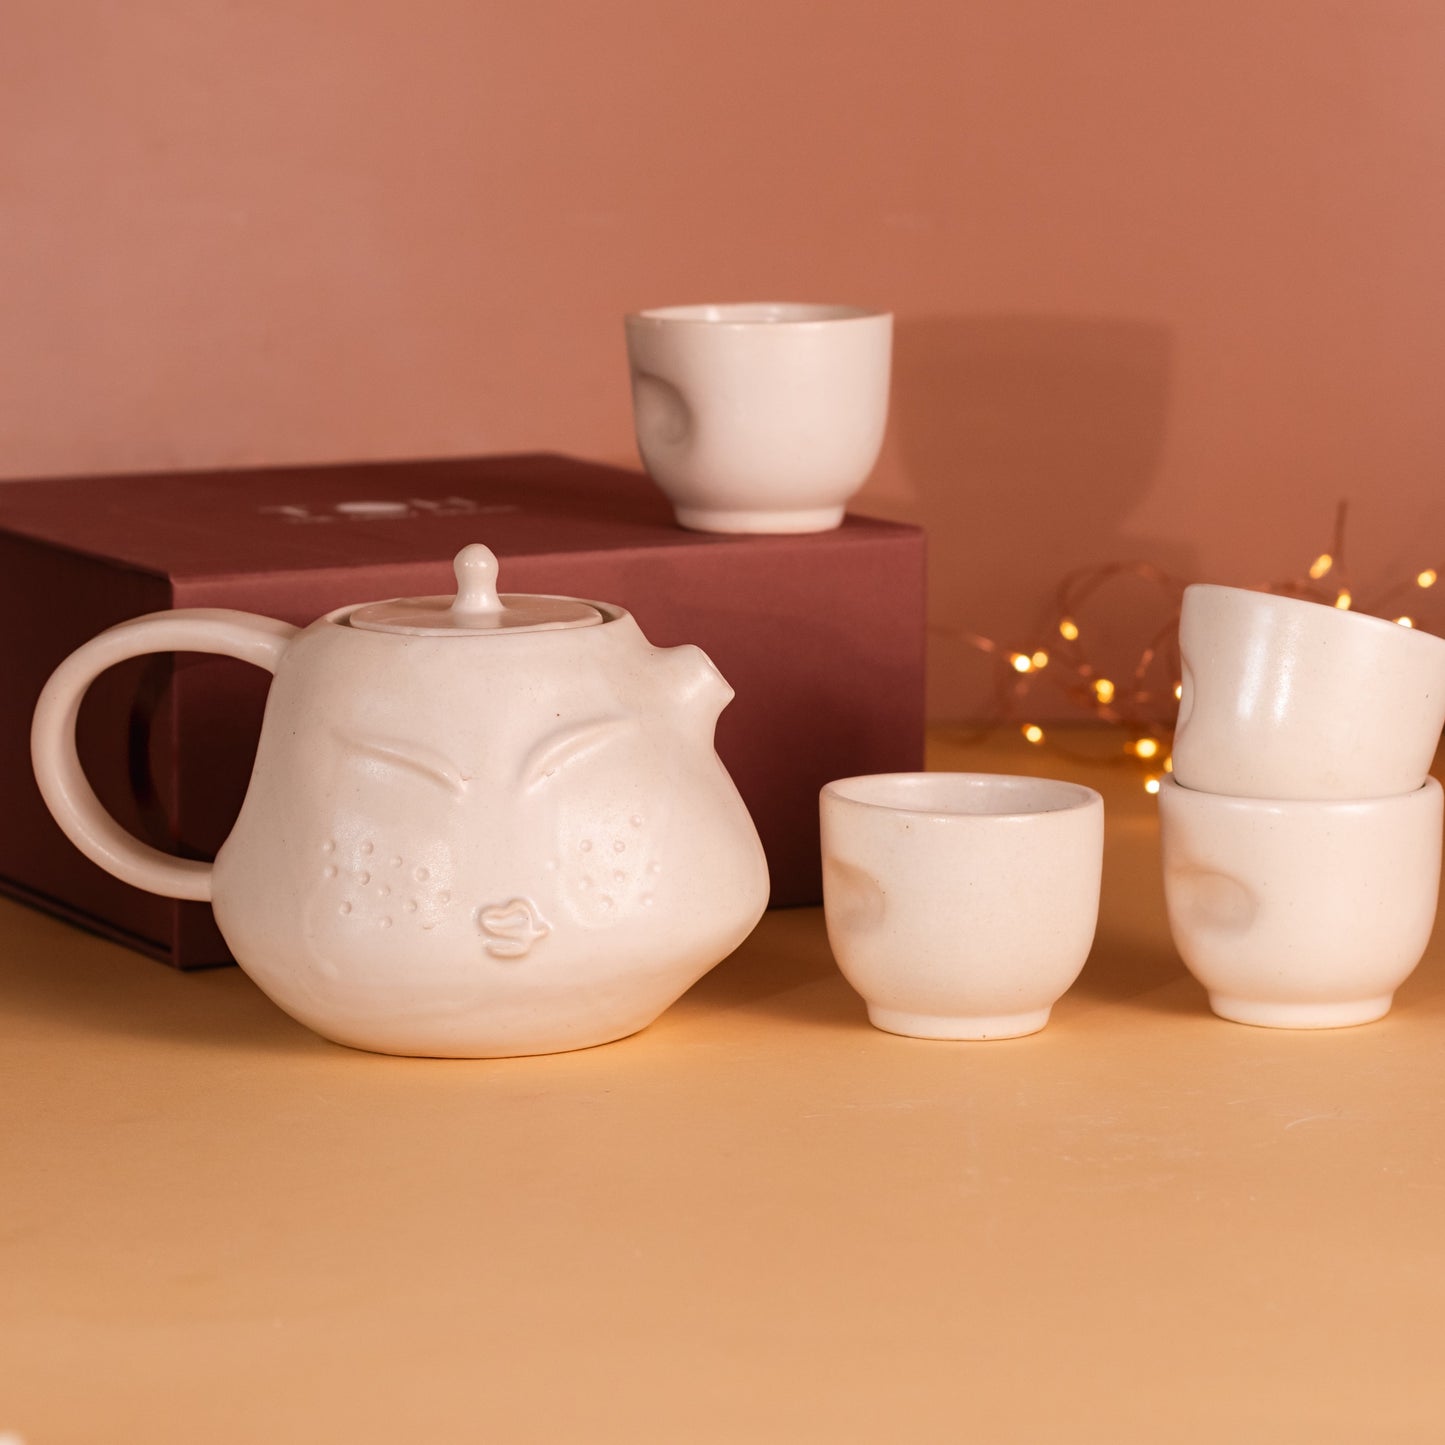 Brew-tea-ful Festive Gift Box - The Sage Face White Ceramic Tea-Pot Set with 4 Cups, Hibiscus/Rose Tea